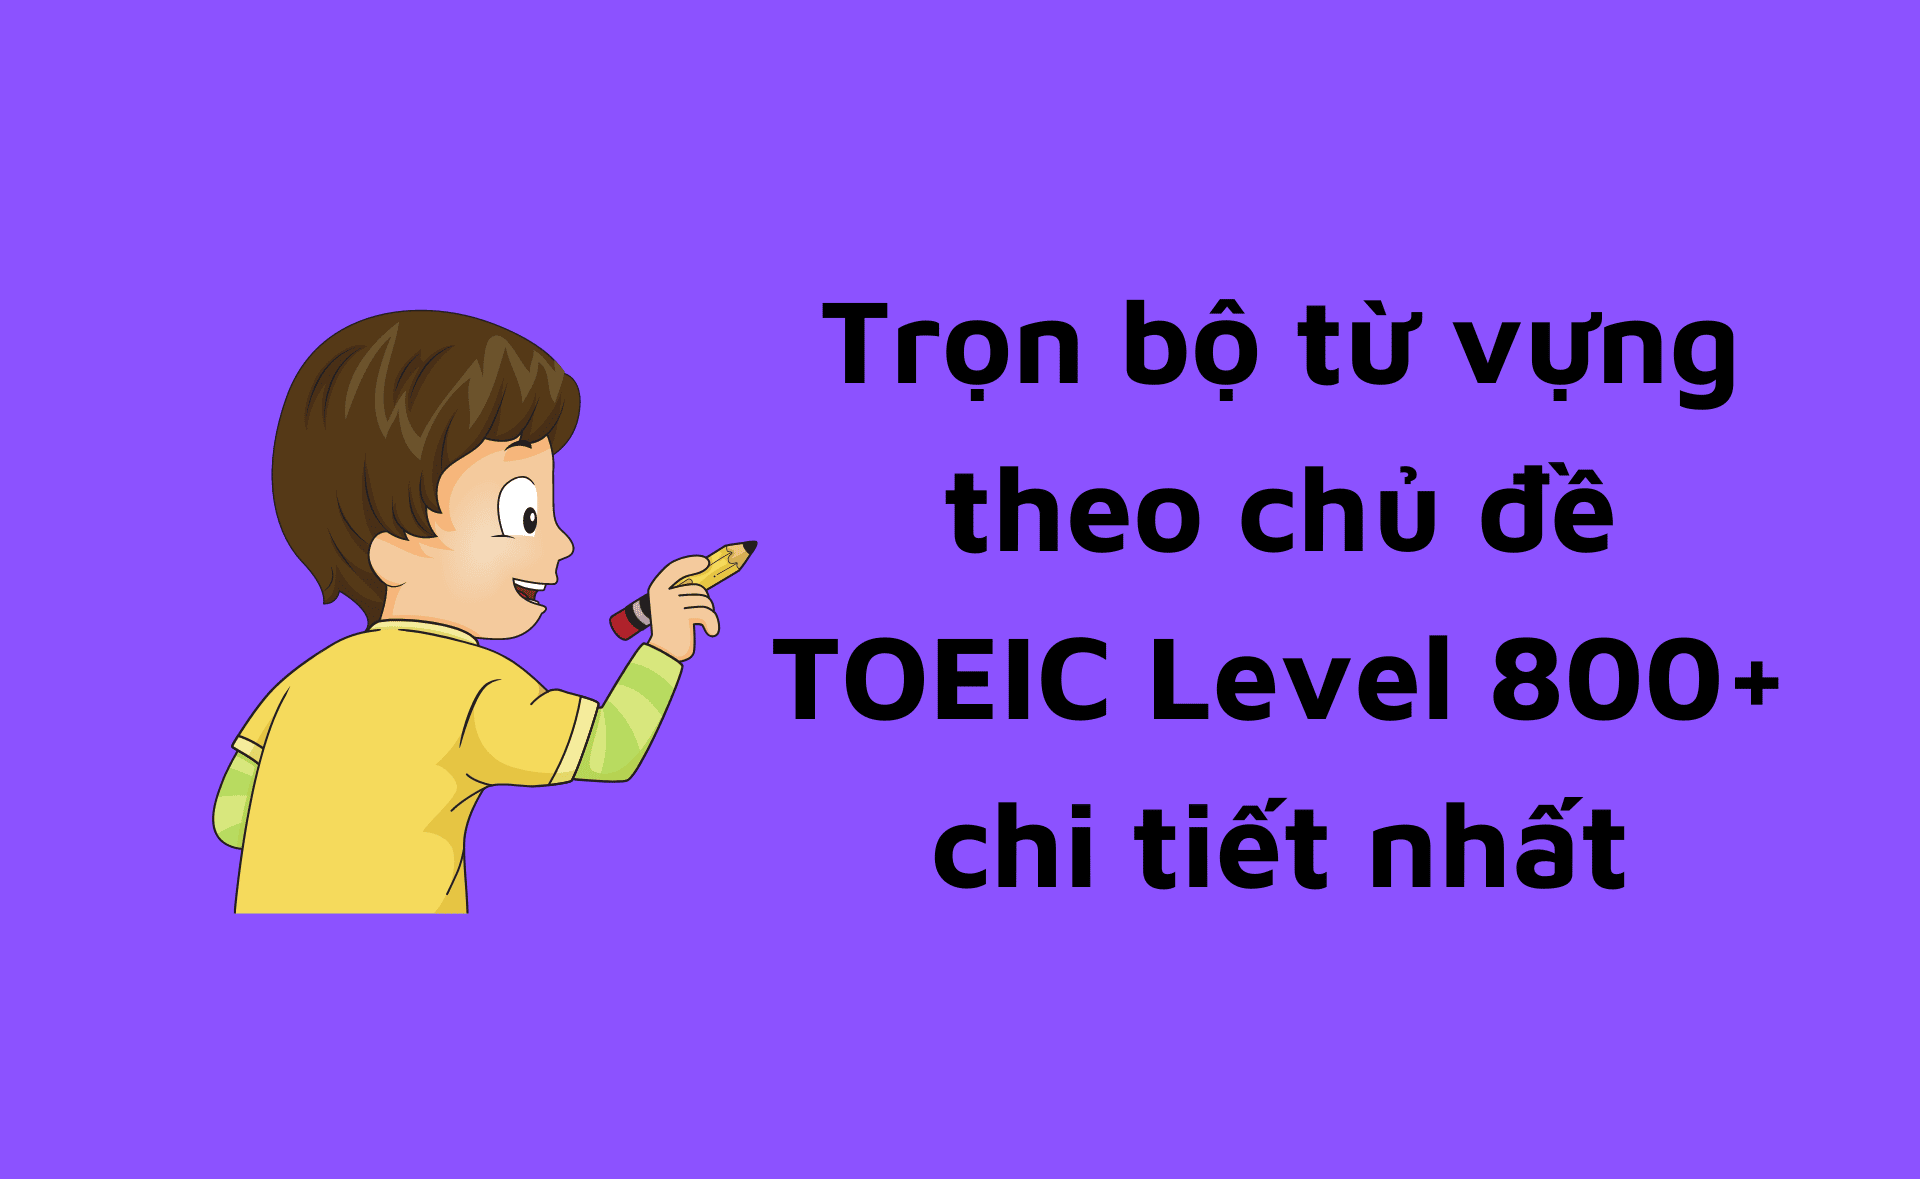 TOEIC Level 800+